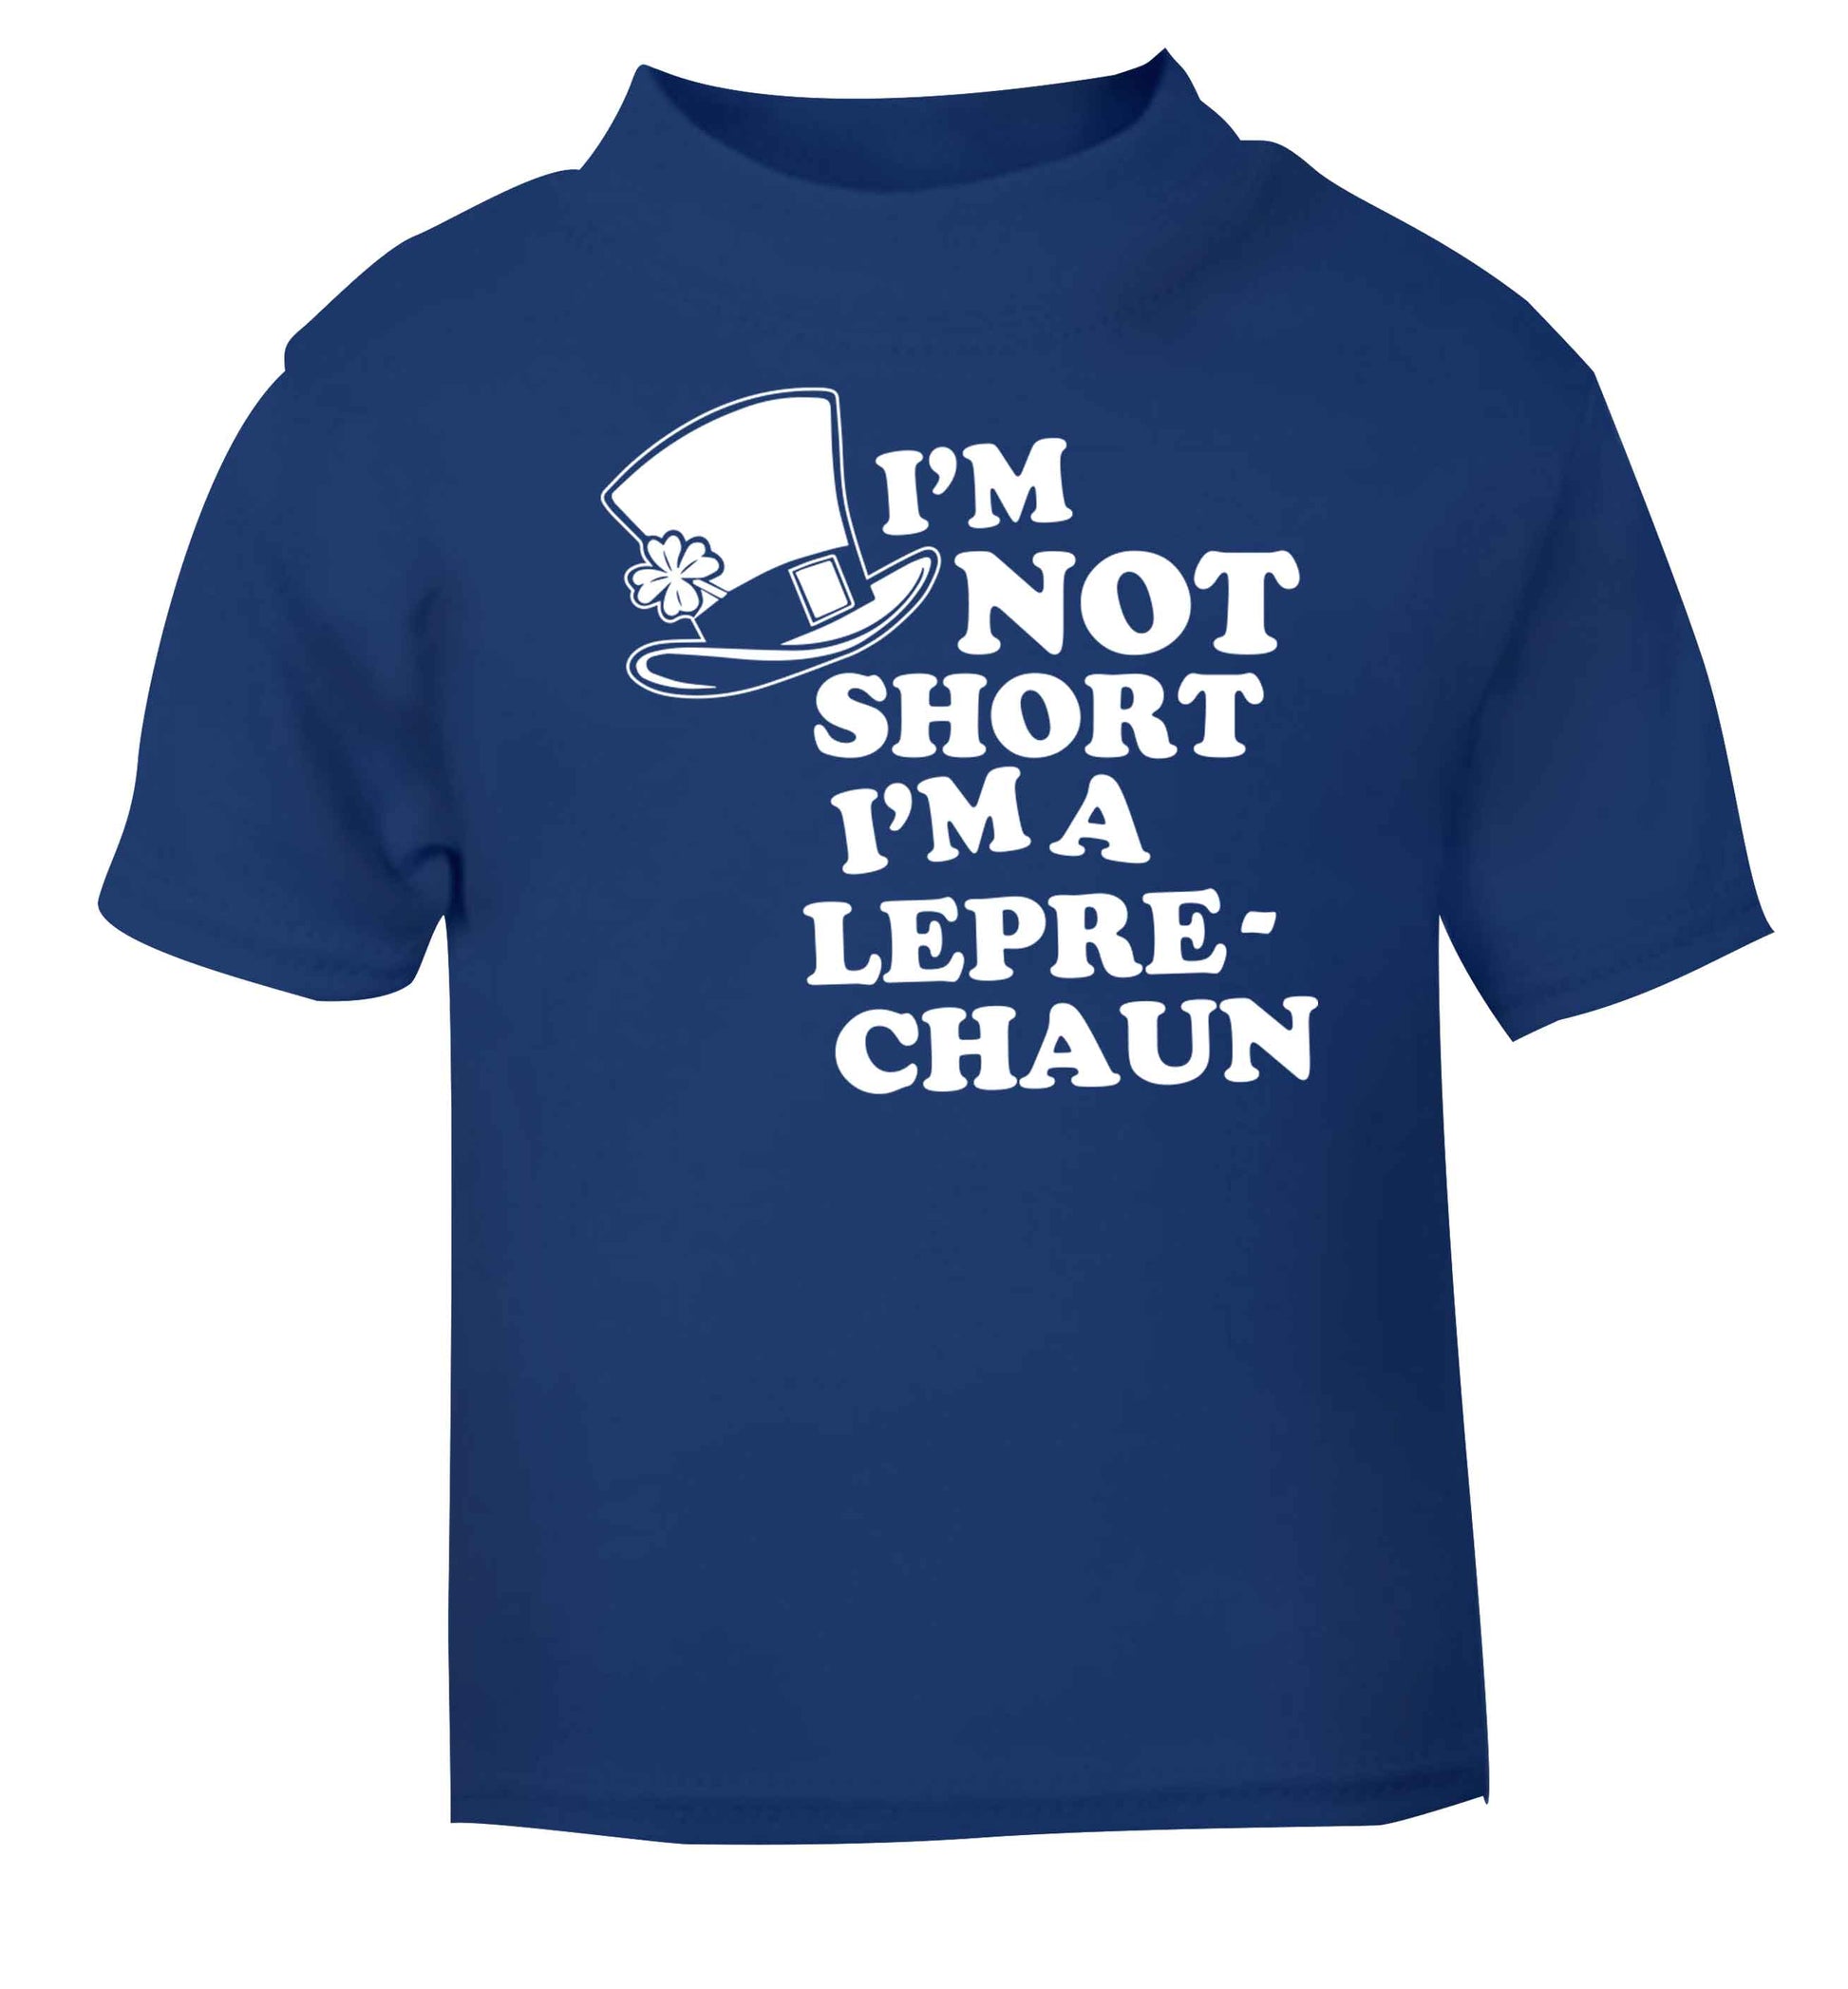 I'm not short I'm a leprechaun blue baby toddler Tshirt 2 Years